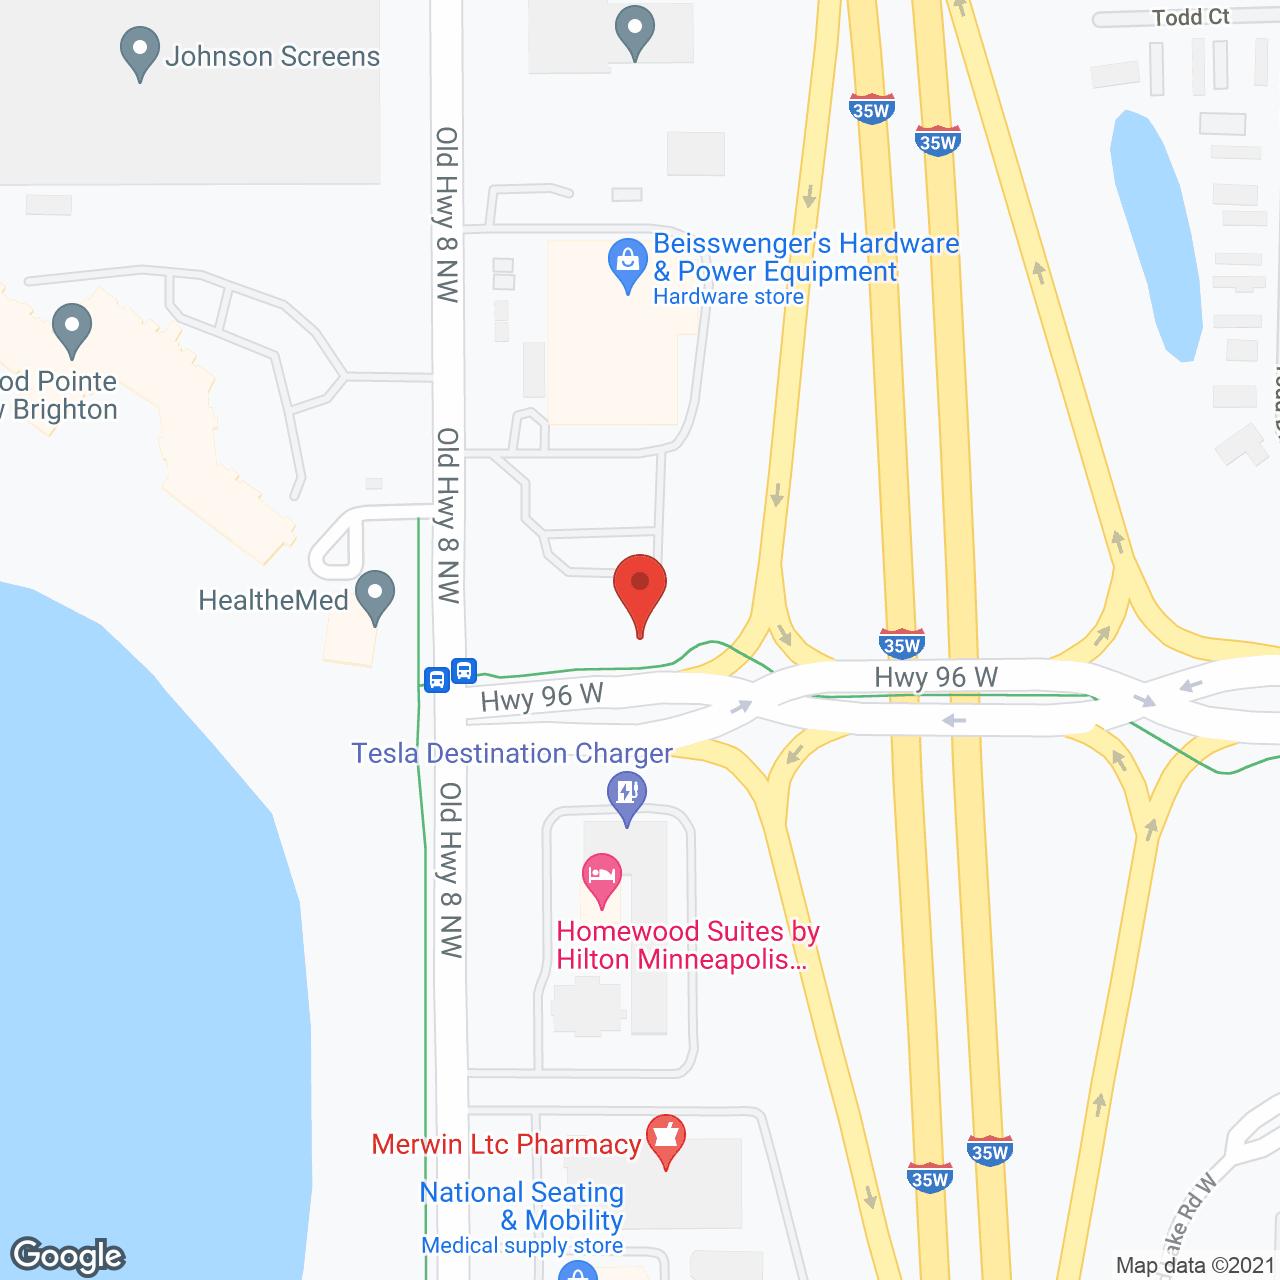 Brighton Pond Apartments in google map